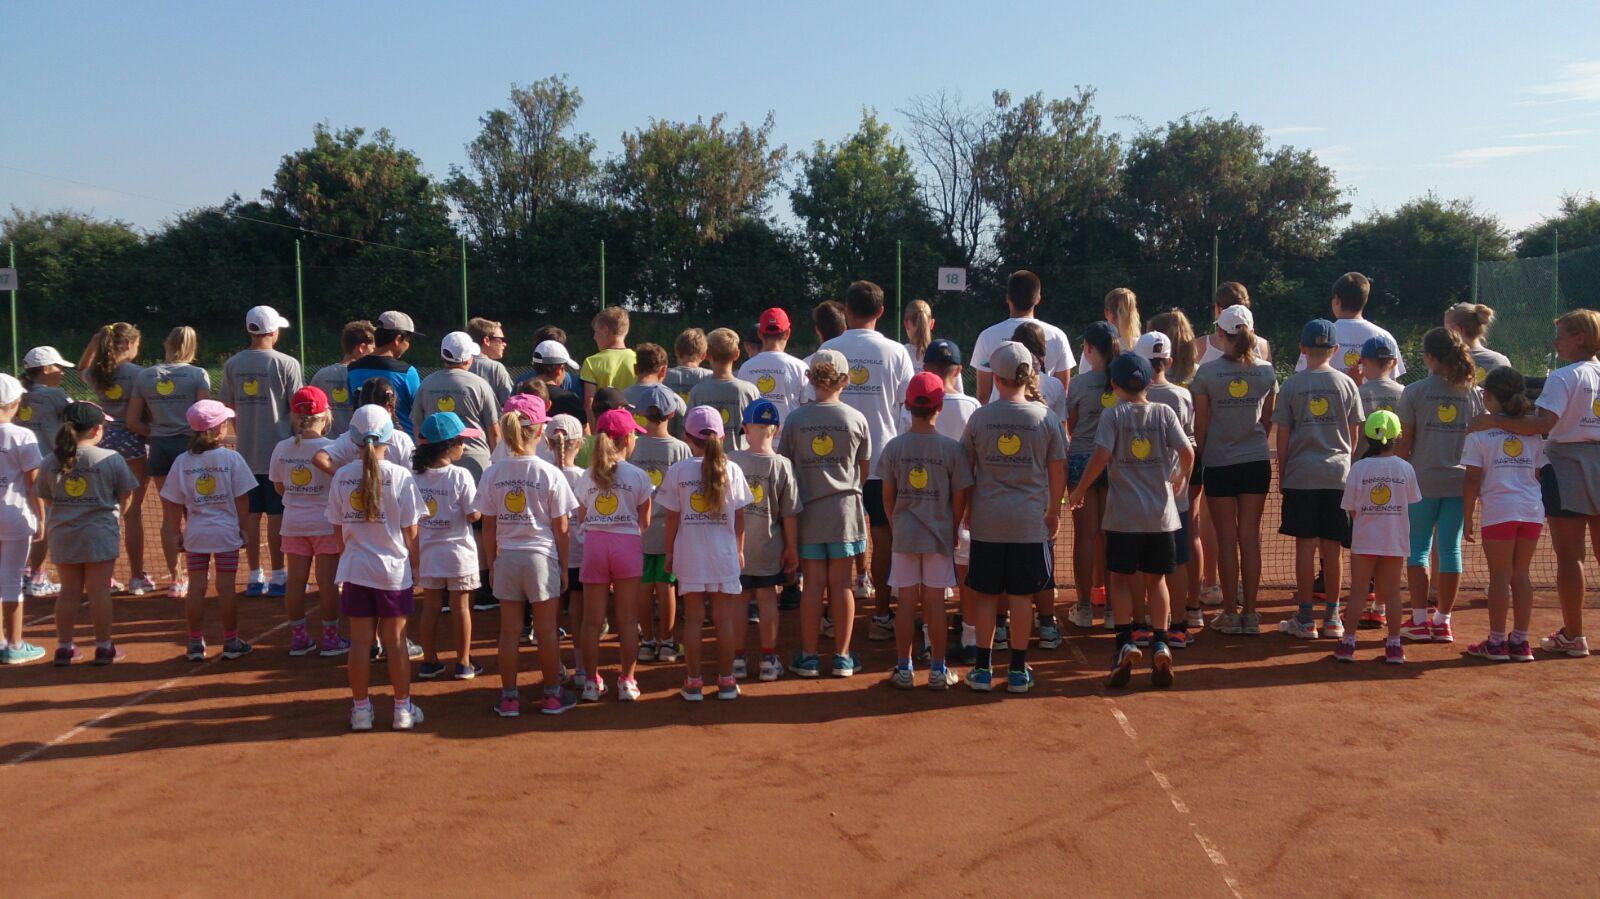 (c) Tennisschule-mariensee.at